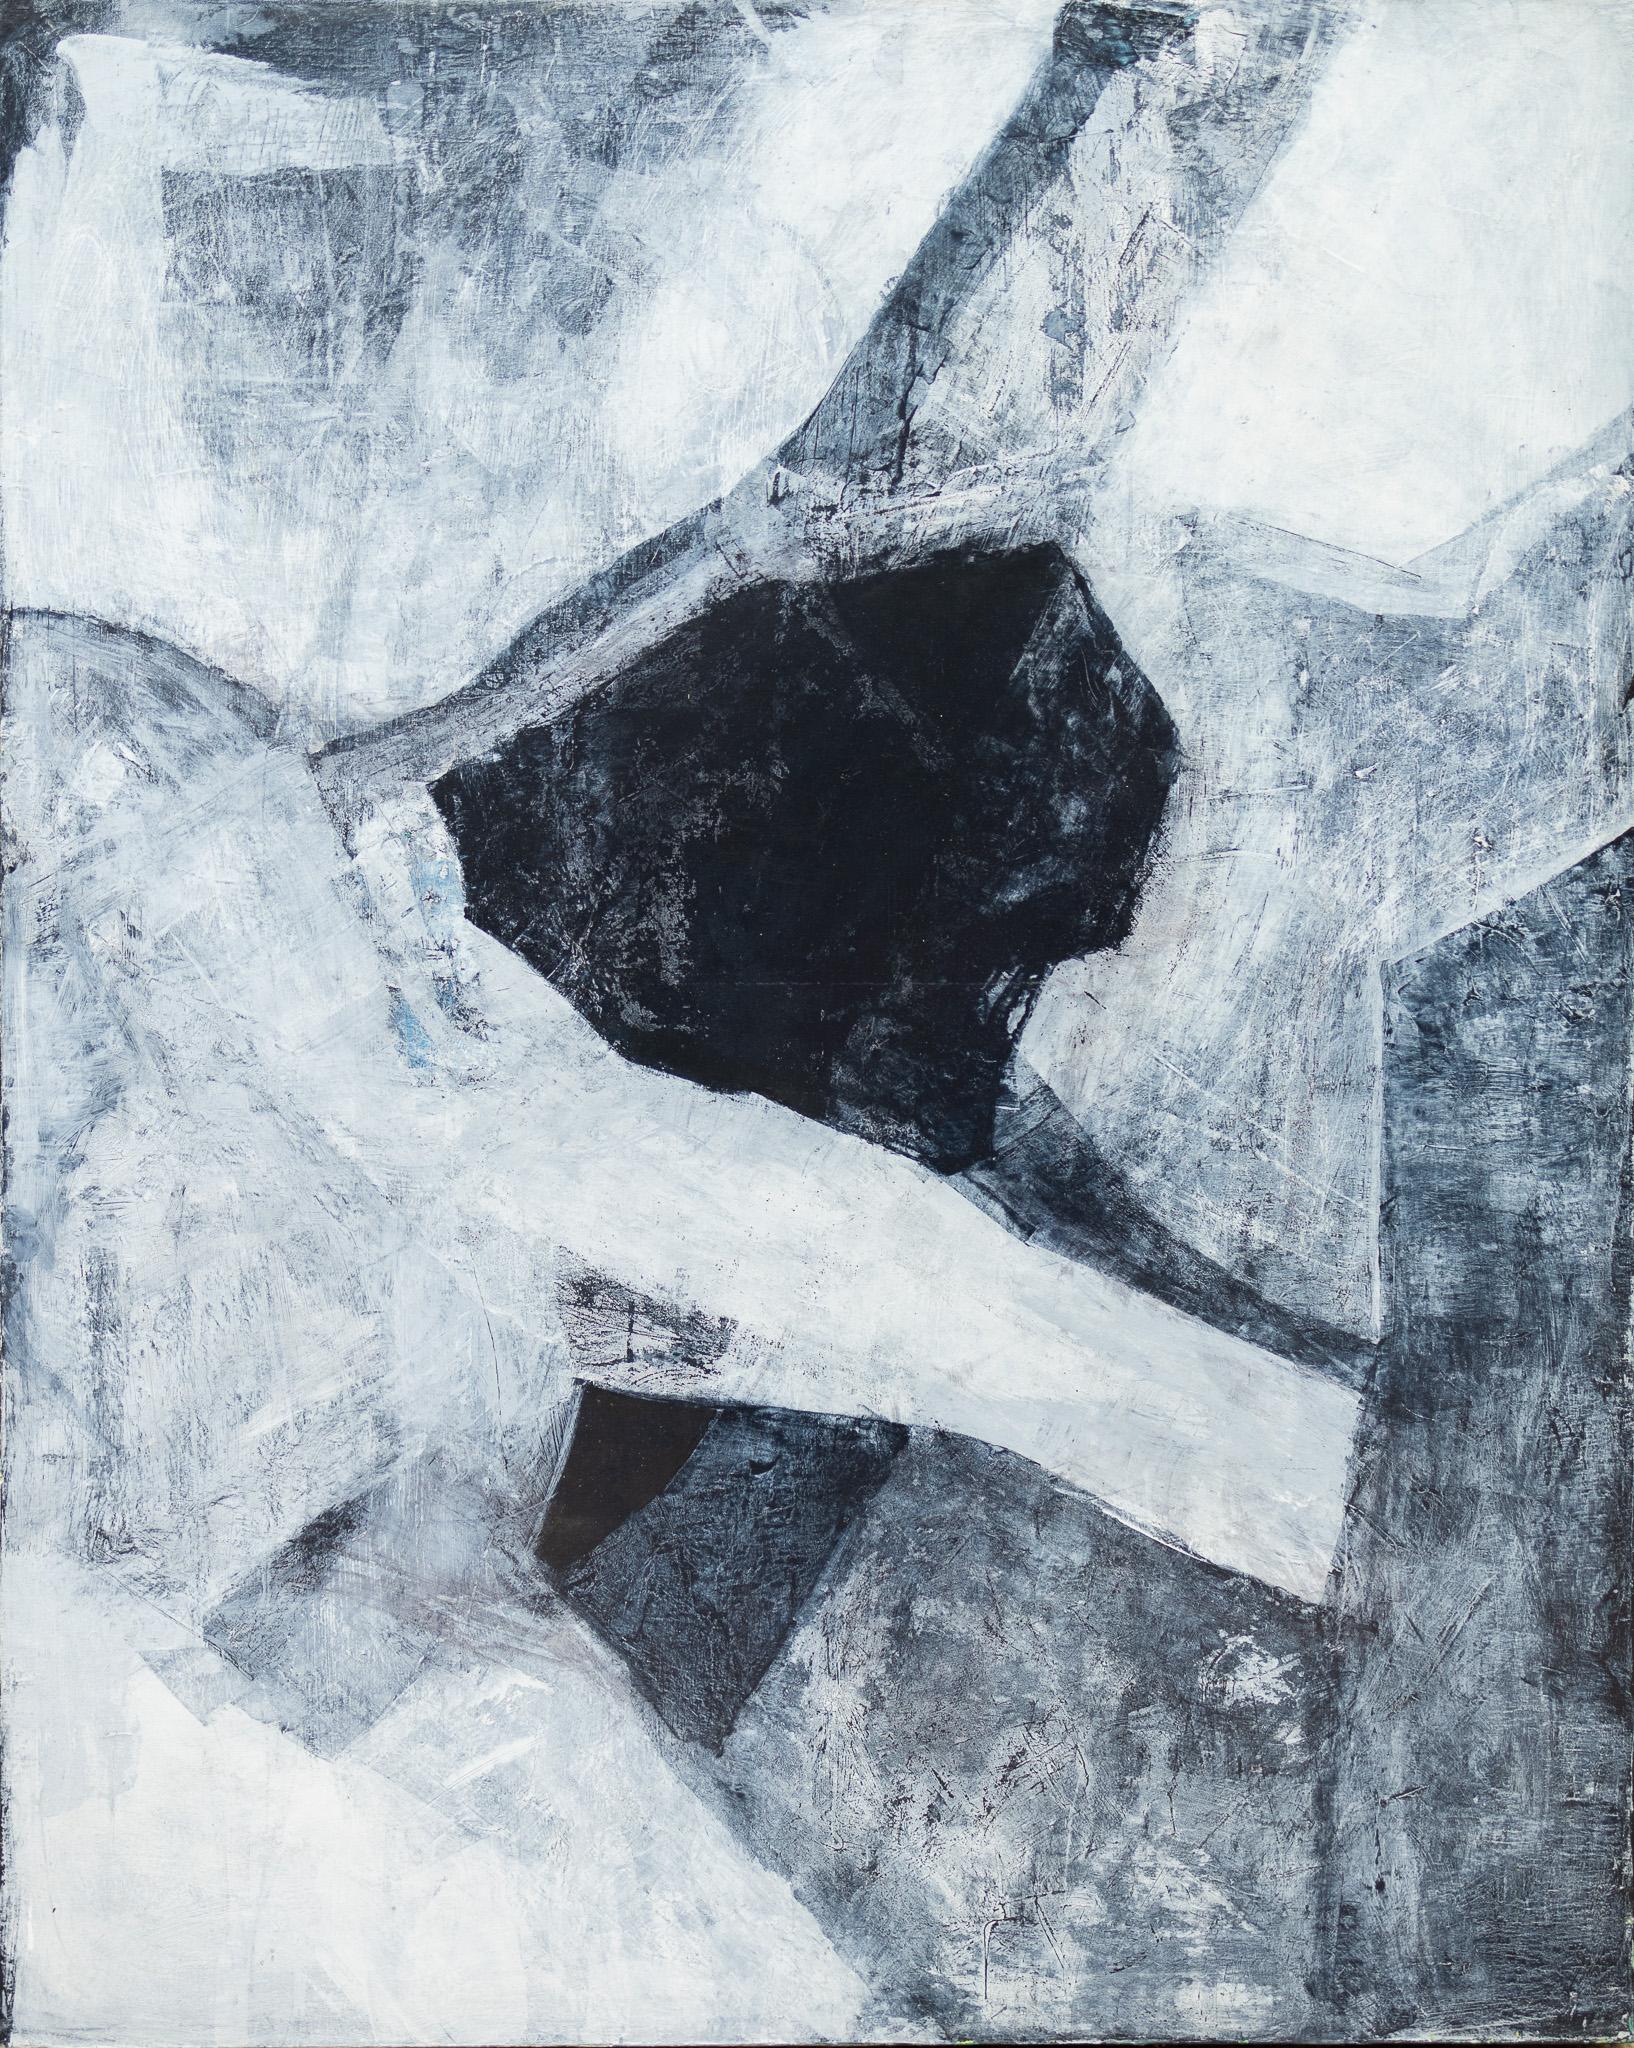 Abstract Painting Tom Reno - "Abstract #60" Grande peinture abstraite à l'échelle grise